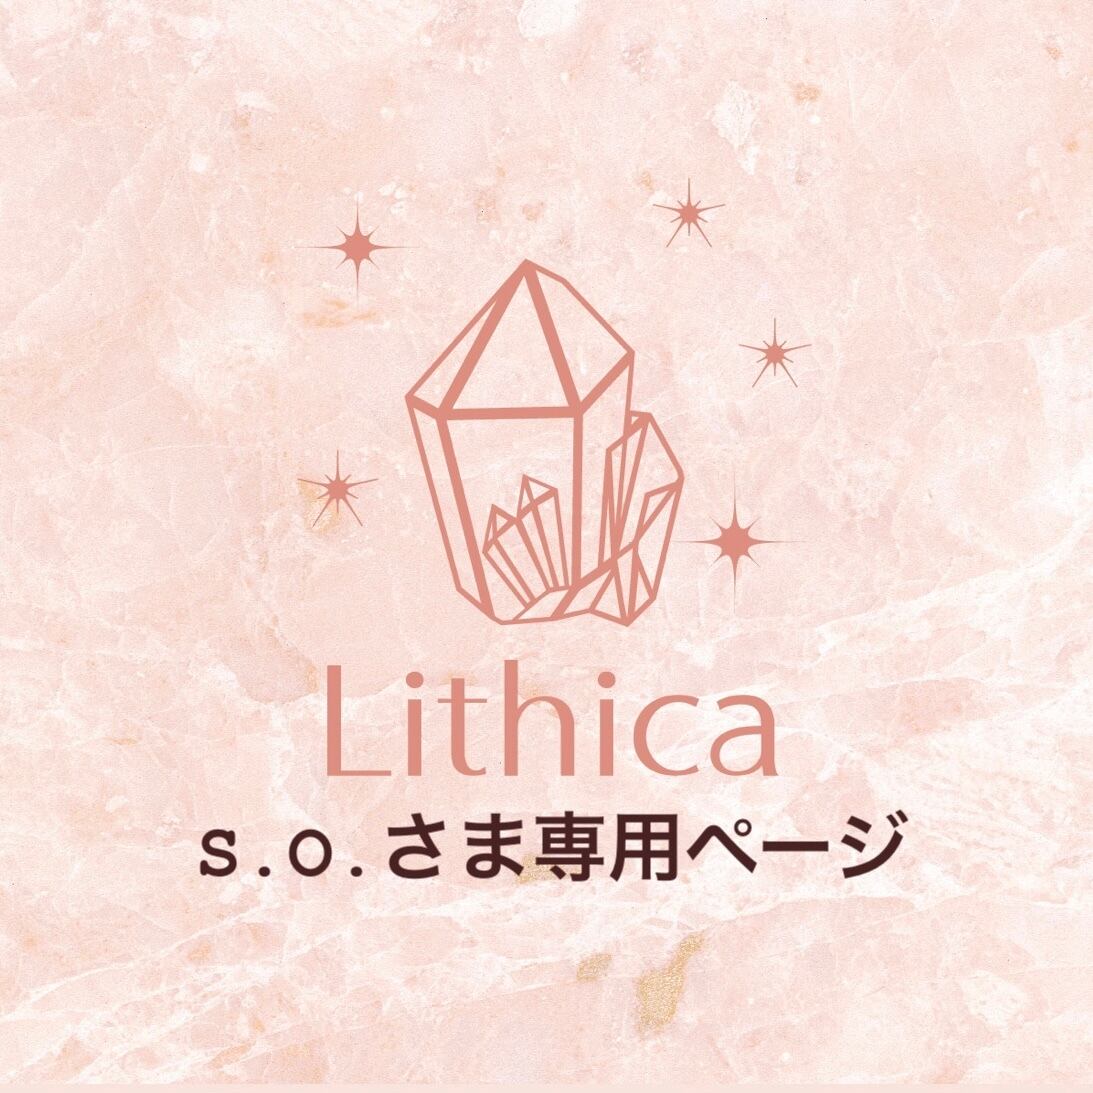 S.O.さま専用ページ | Lithica